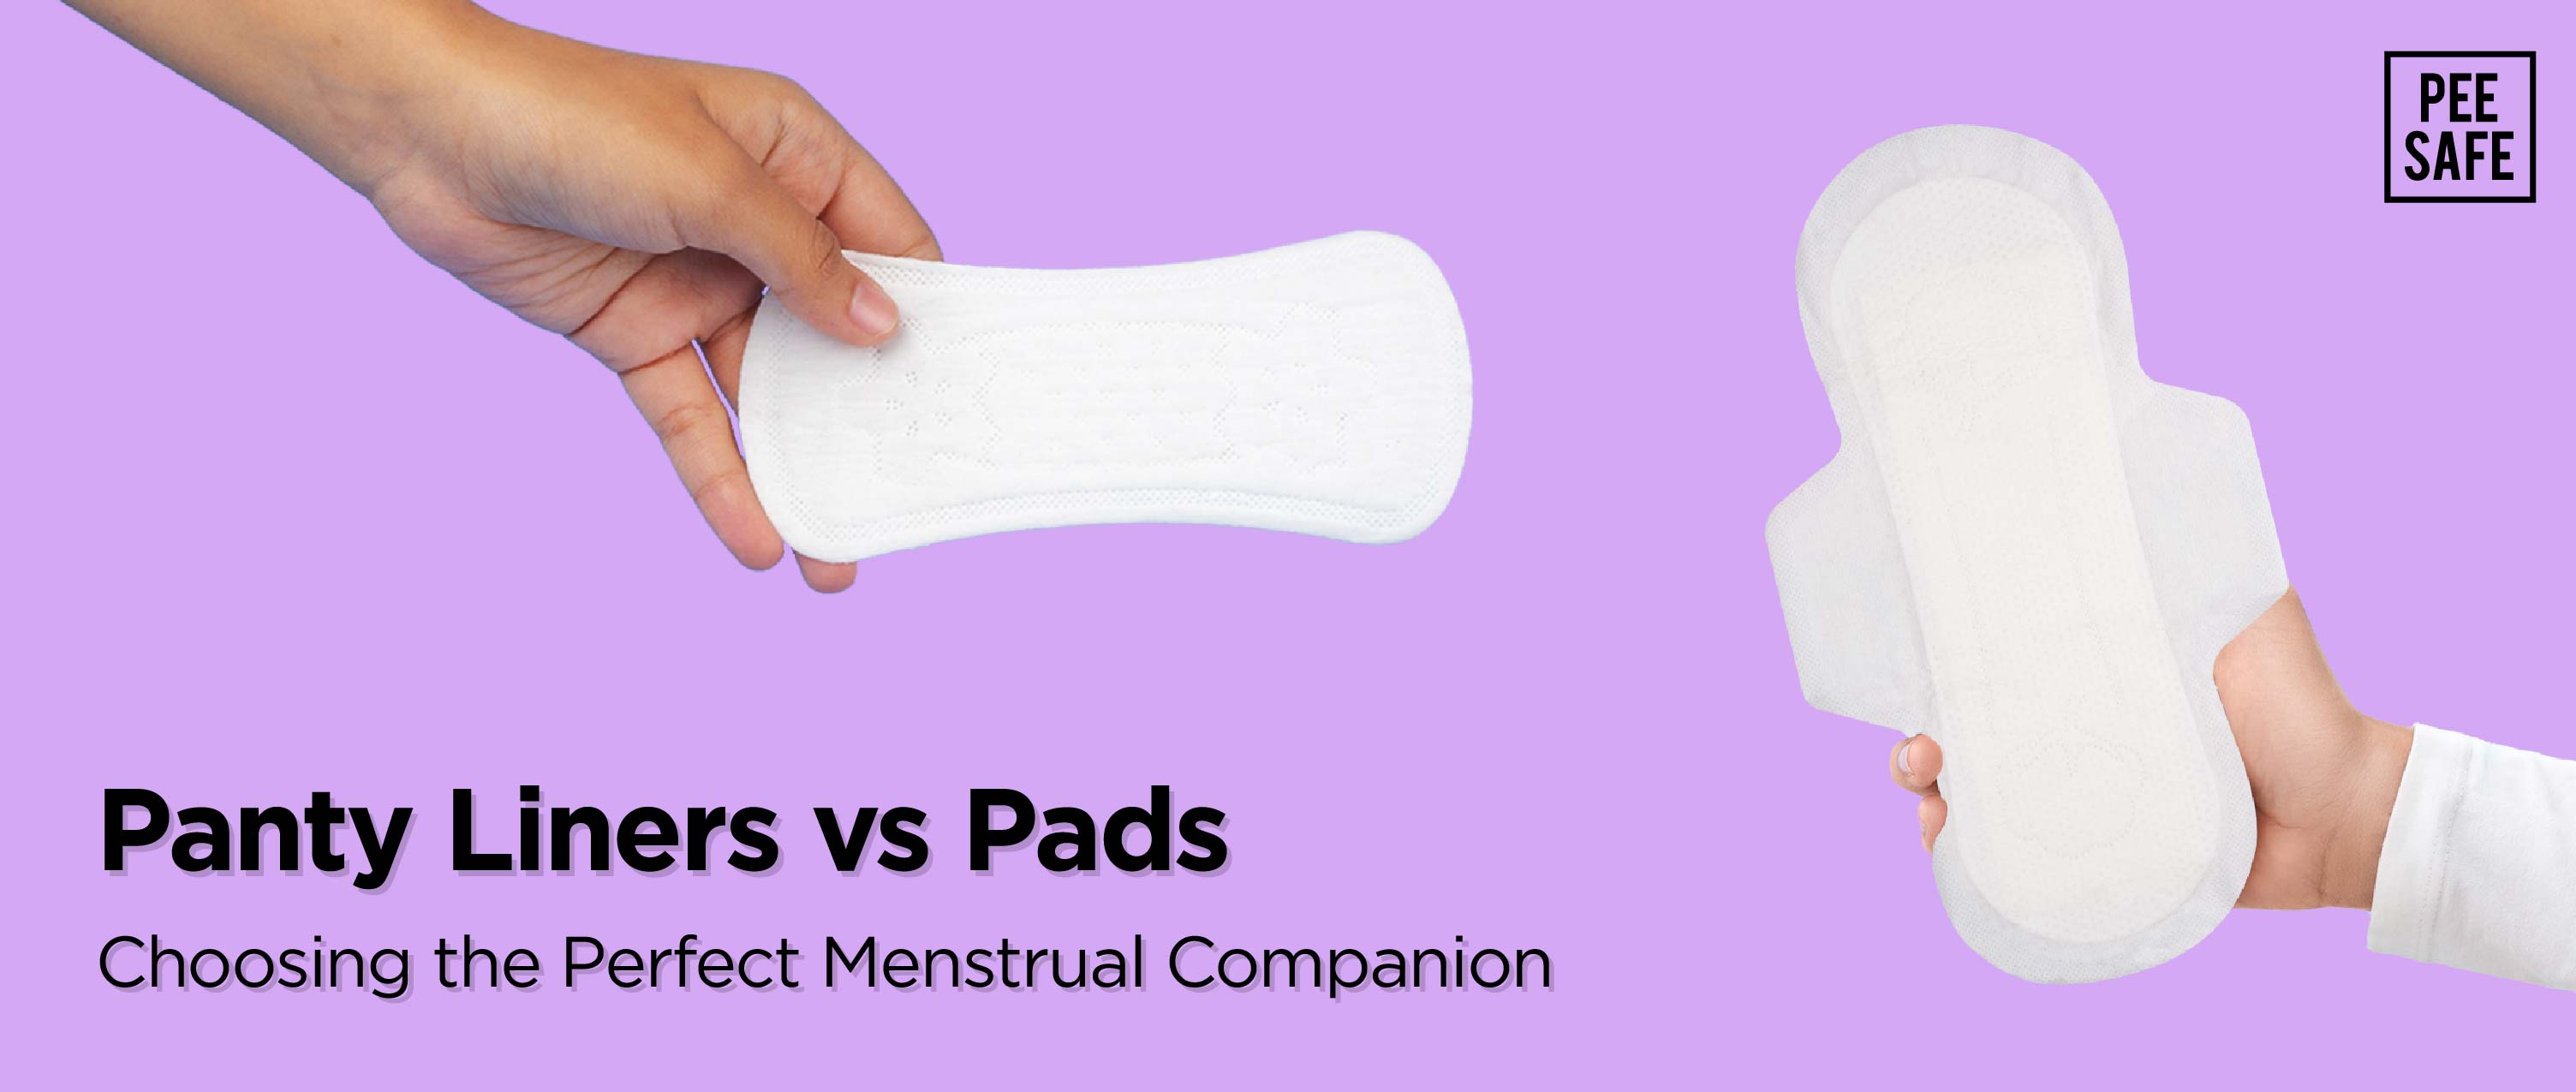 Panty Liners vs Pads: Choosing the Perfect Menstrual Companion